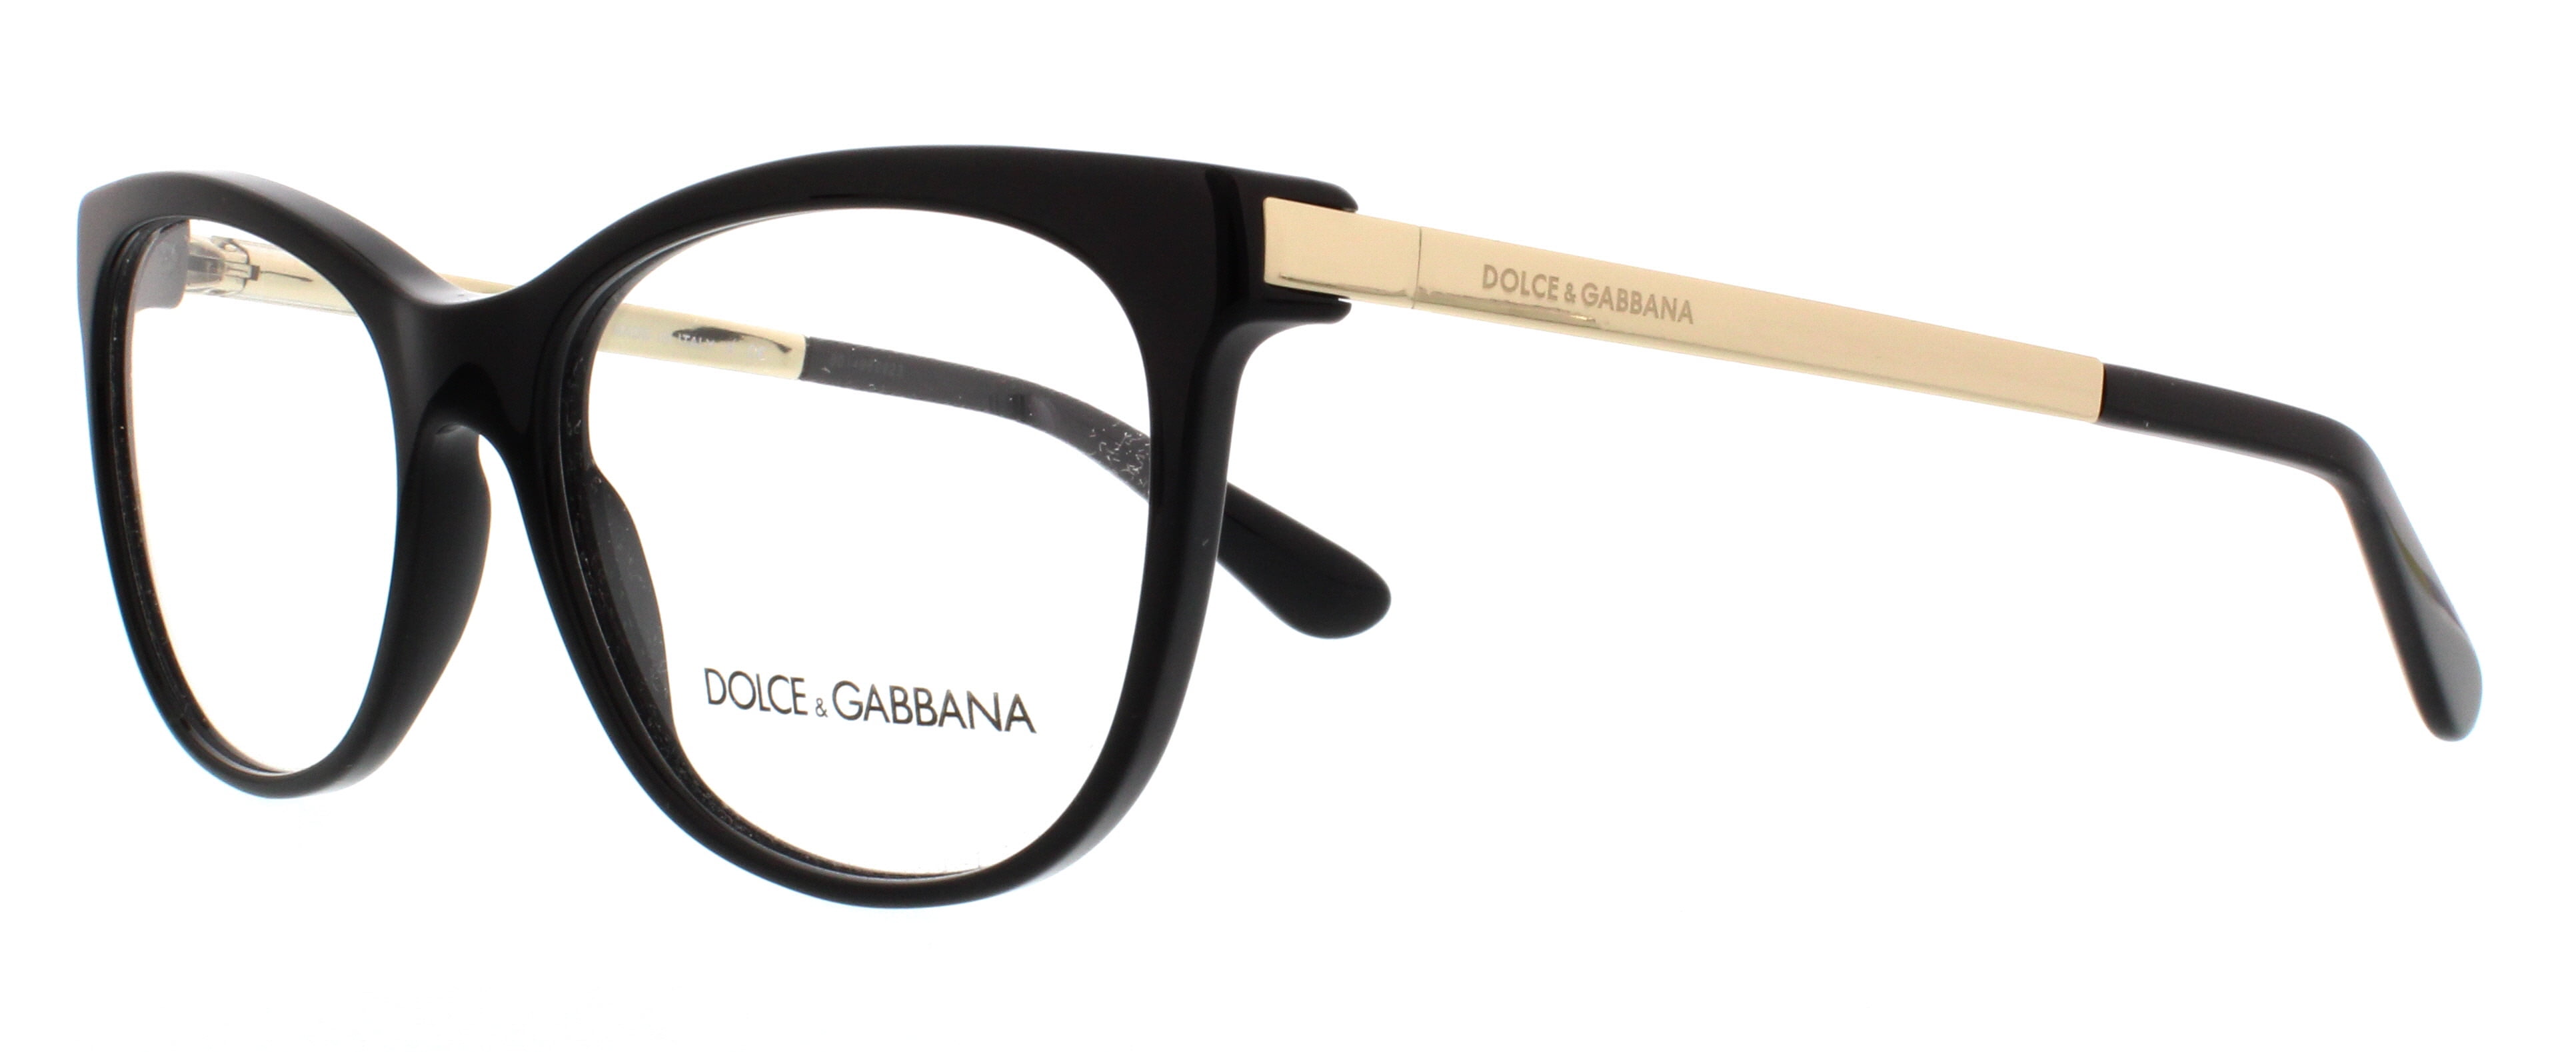 dolce and gabbana eyeglasses womens